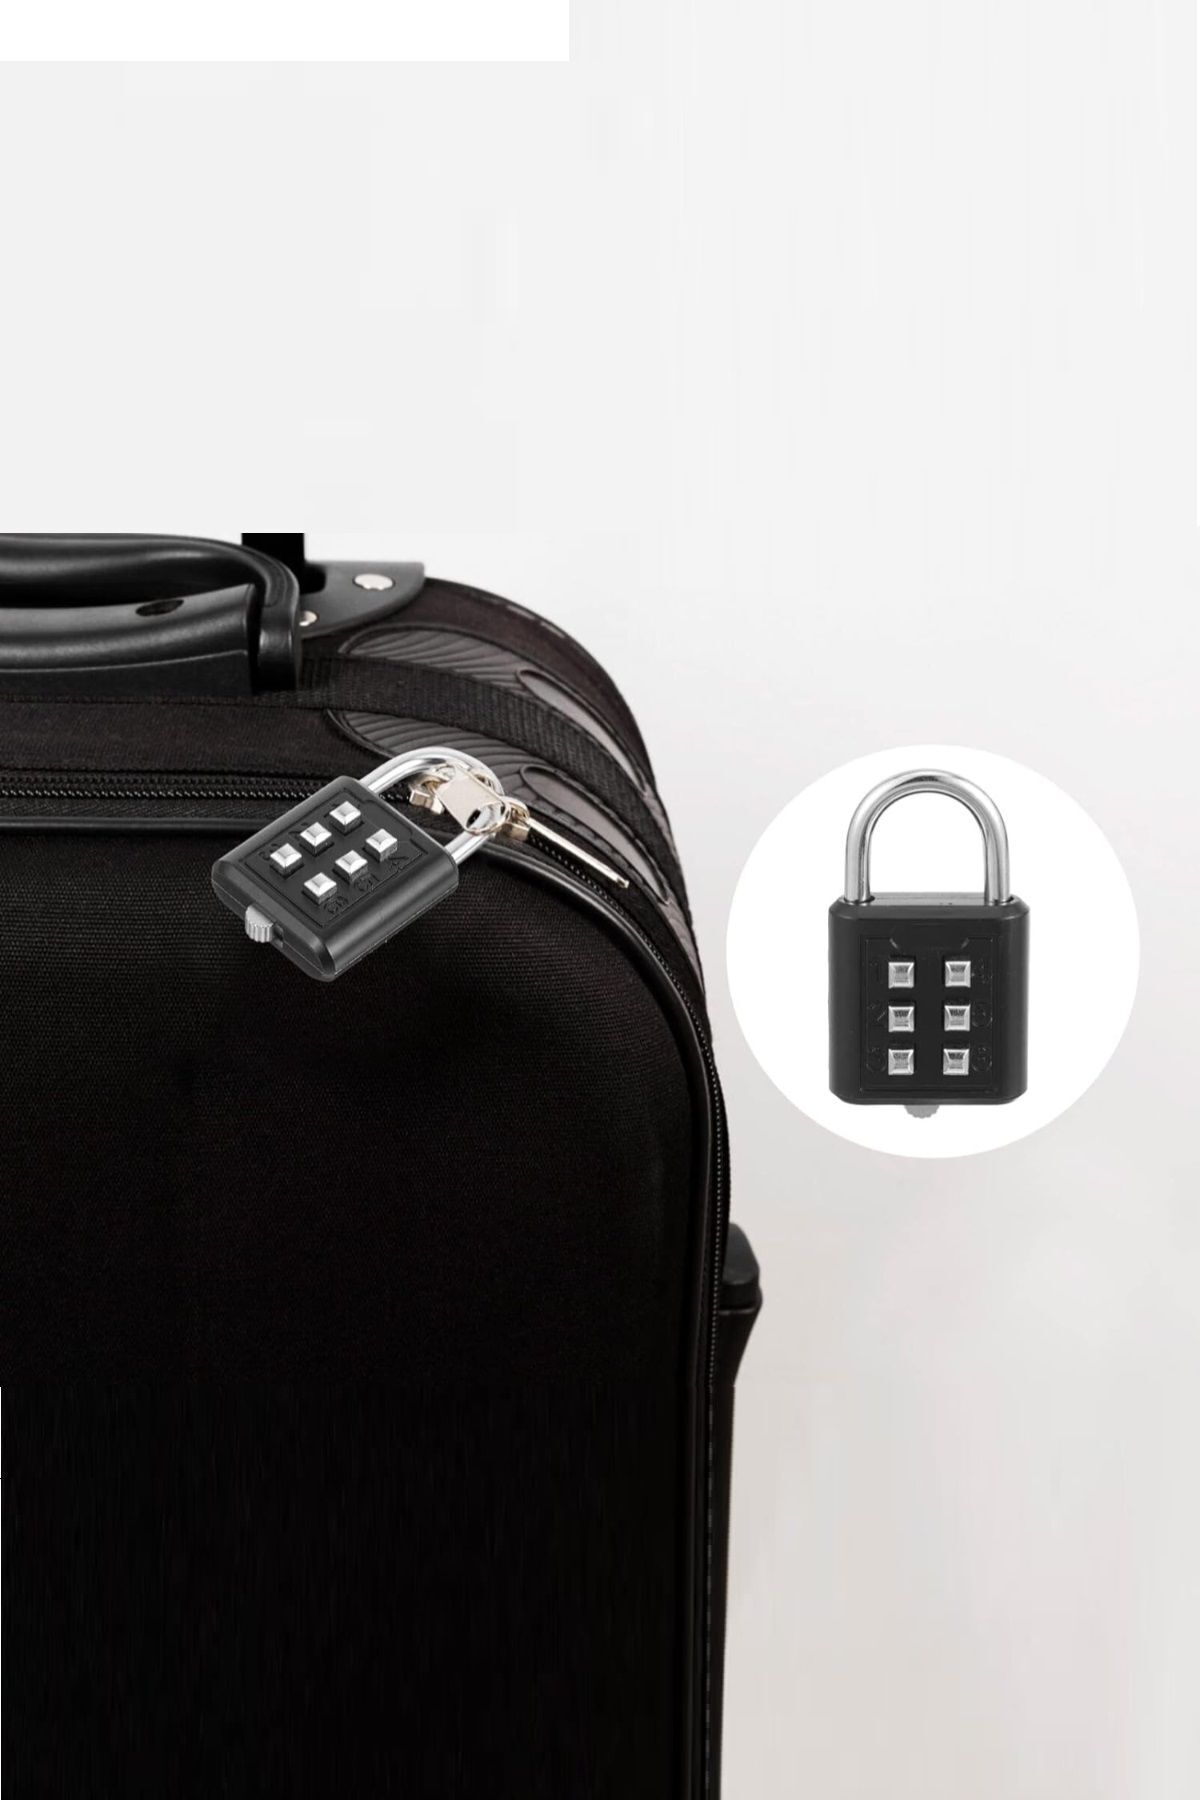 Xolo Basmalı Su Geçirmez 6 Şifreli Otomatik Şifreli Kilit Seyahat Tipi Kilit Dolap Kilitleme XLK411